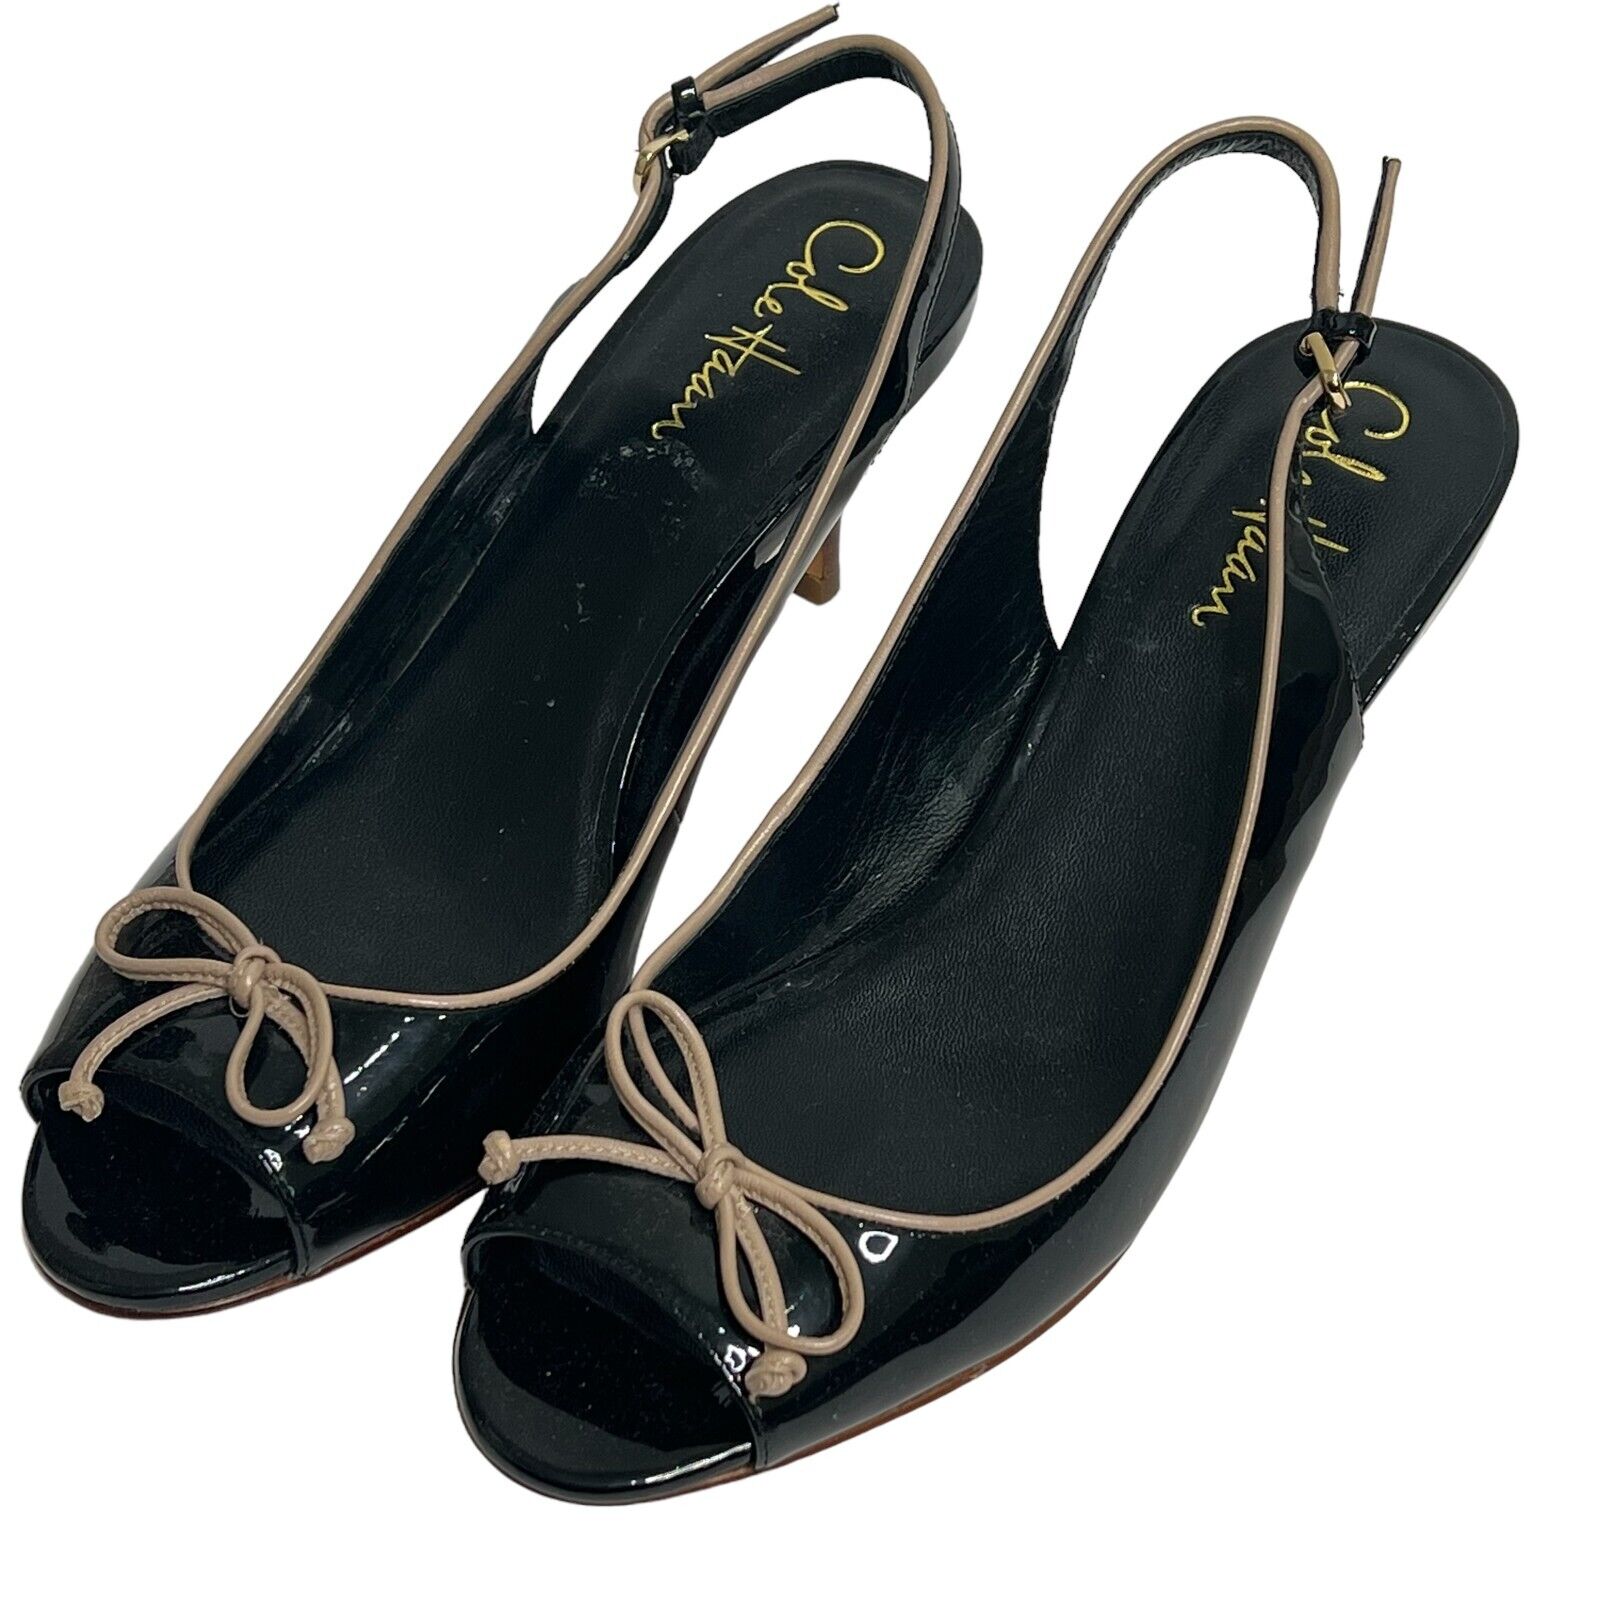 Cole Haan Black Tan Patent Leather Peep Toe Slingback Kitten Heels Size 7.5